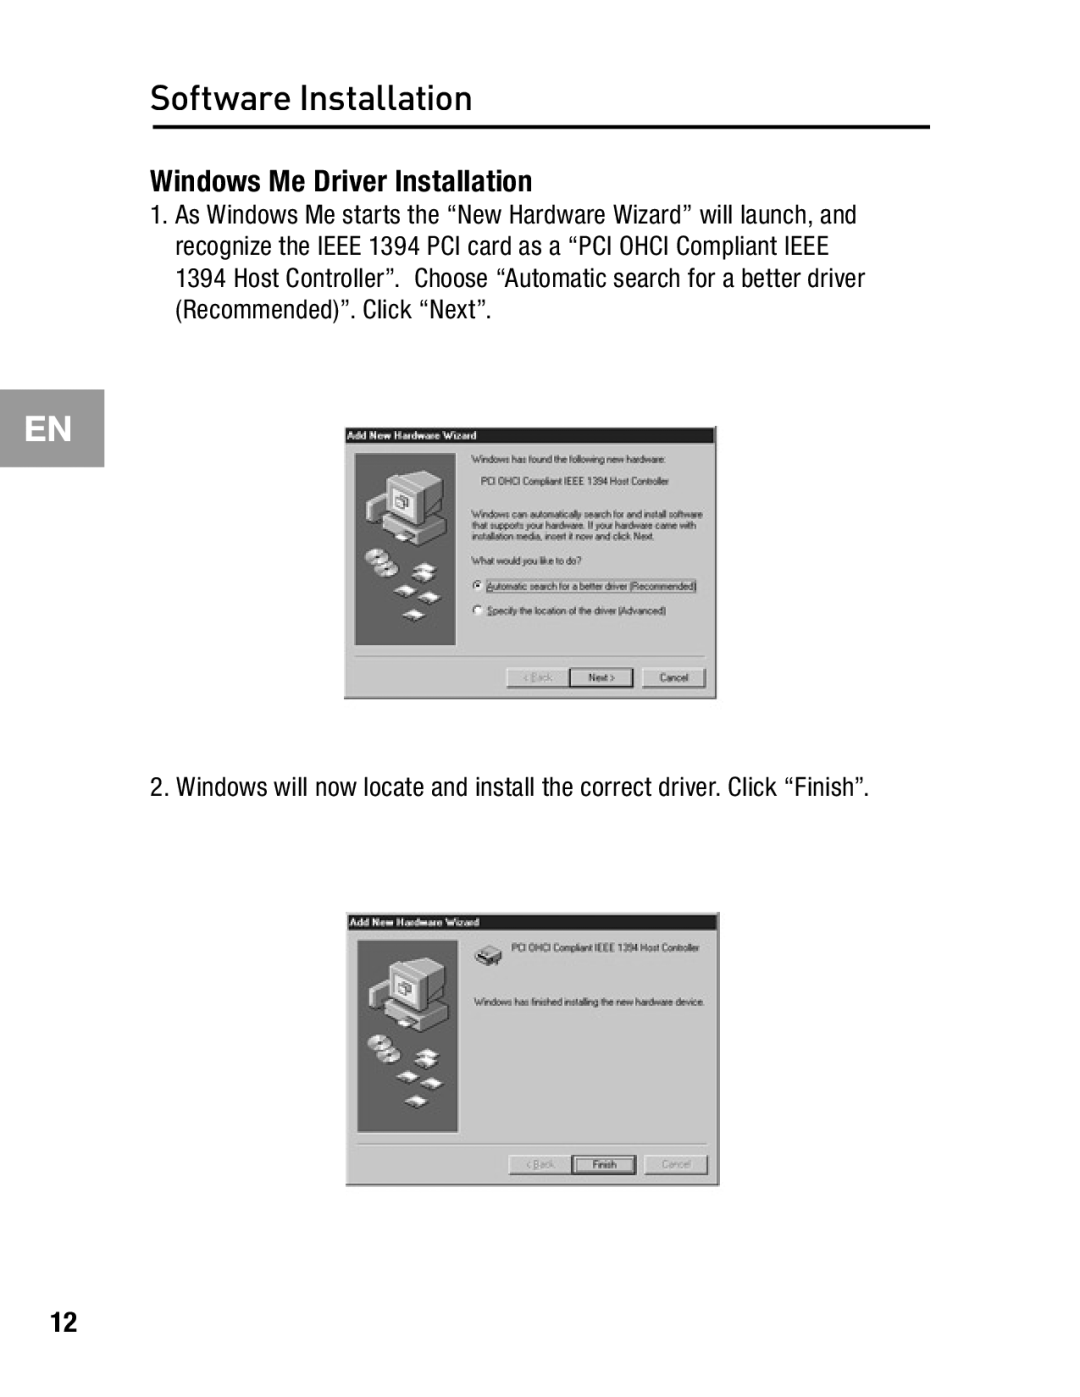 Belkin F5U503, F5U502 user manual Windows Me Driver Installation, Software Installation 